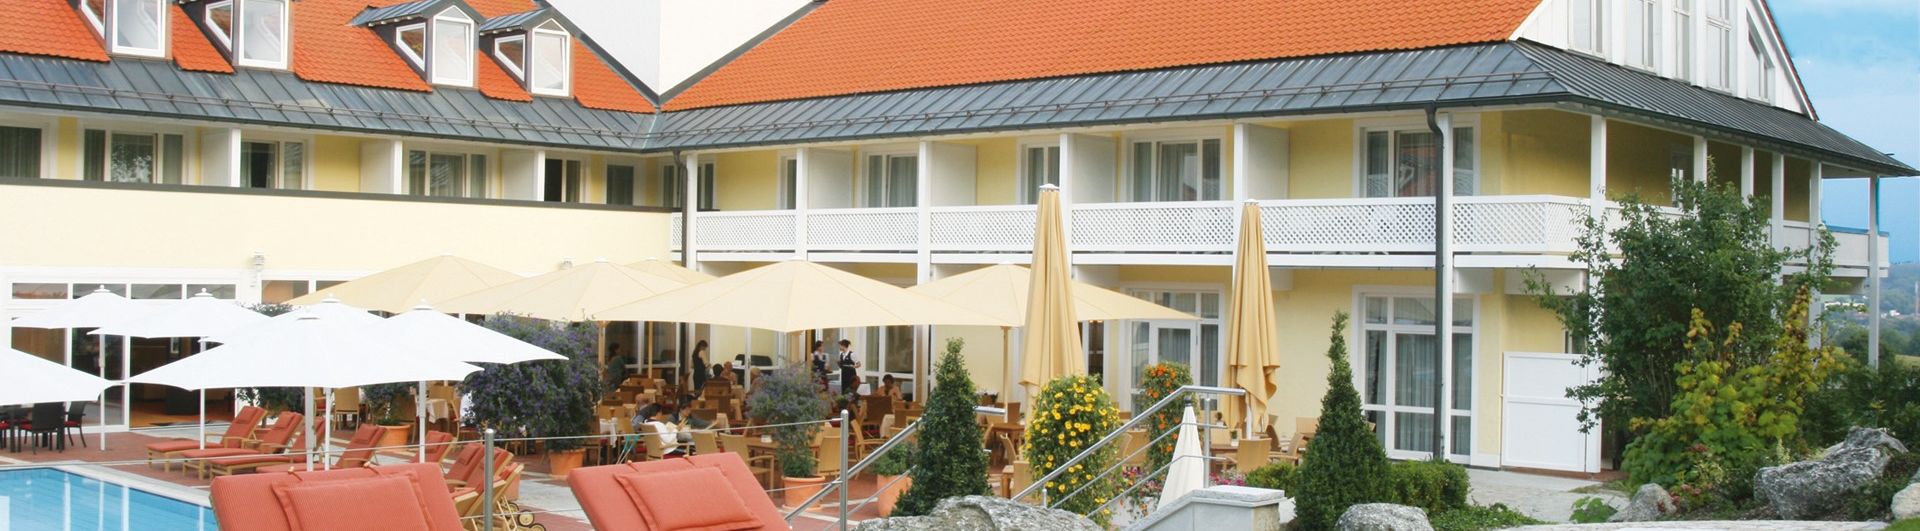 Asklepios Klinik Bad Griesbach | Klinik und Hotel St. Wolfgang